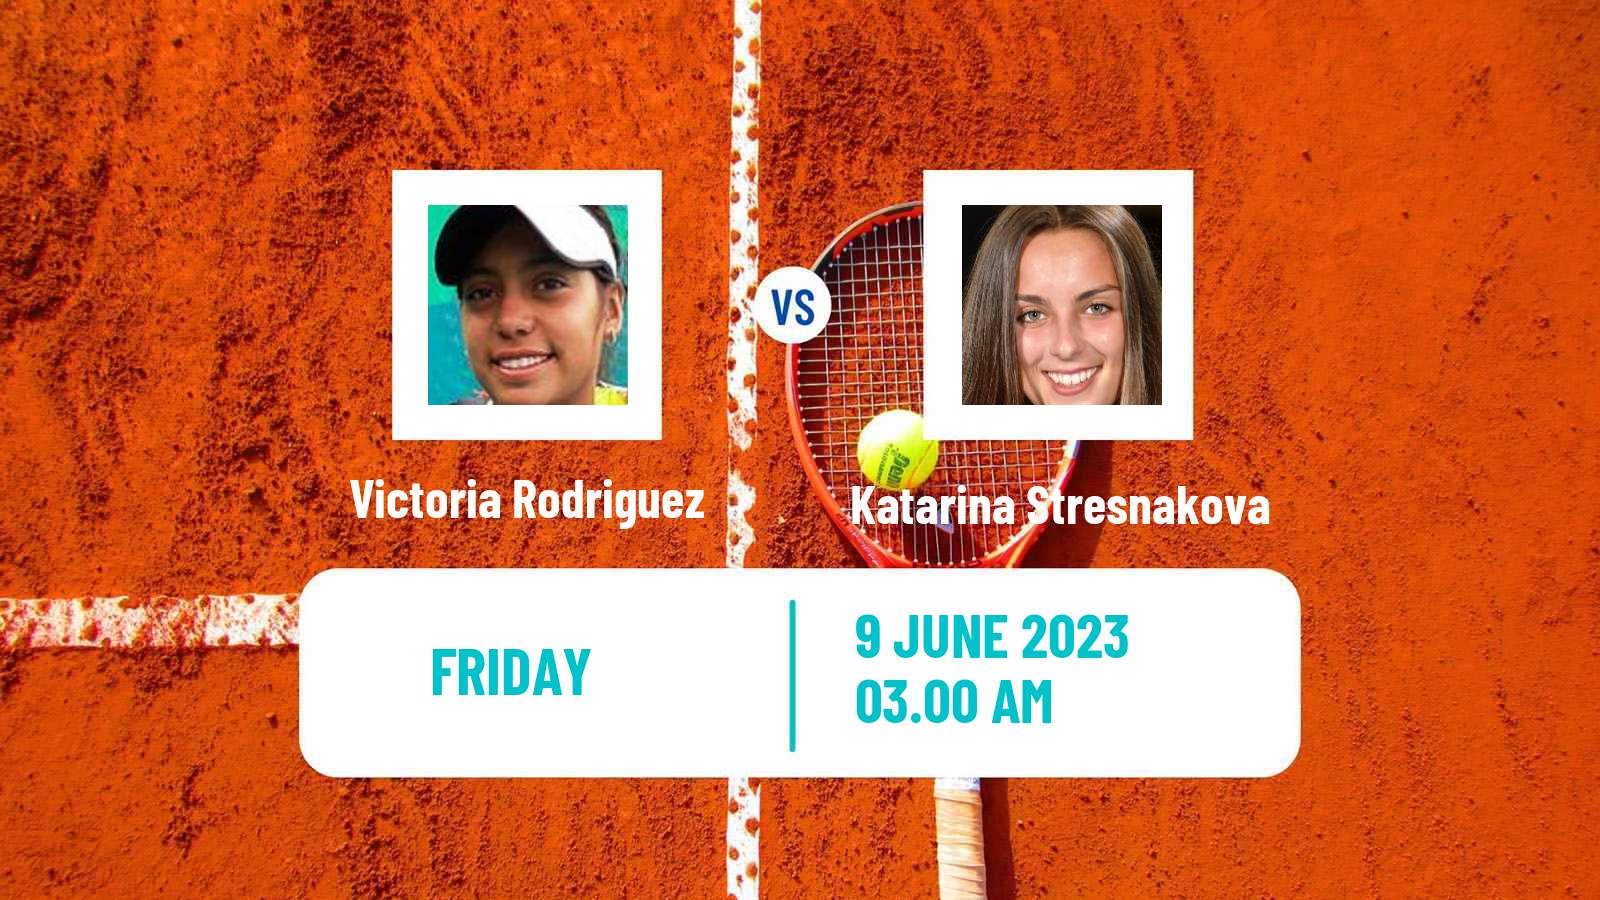 Tennis ITF W25 Madrid Women Victoria Rodriguez - Katarina Stresnakova